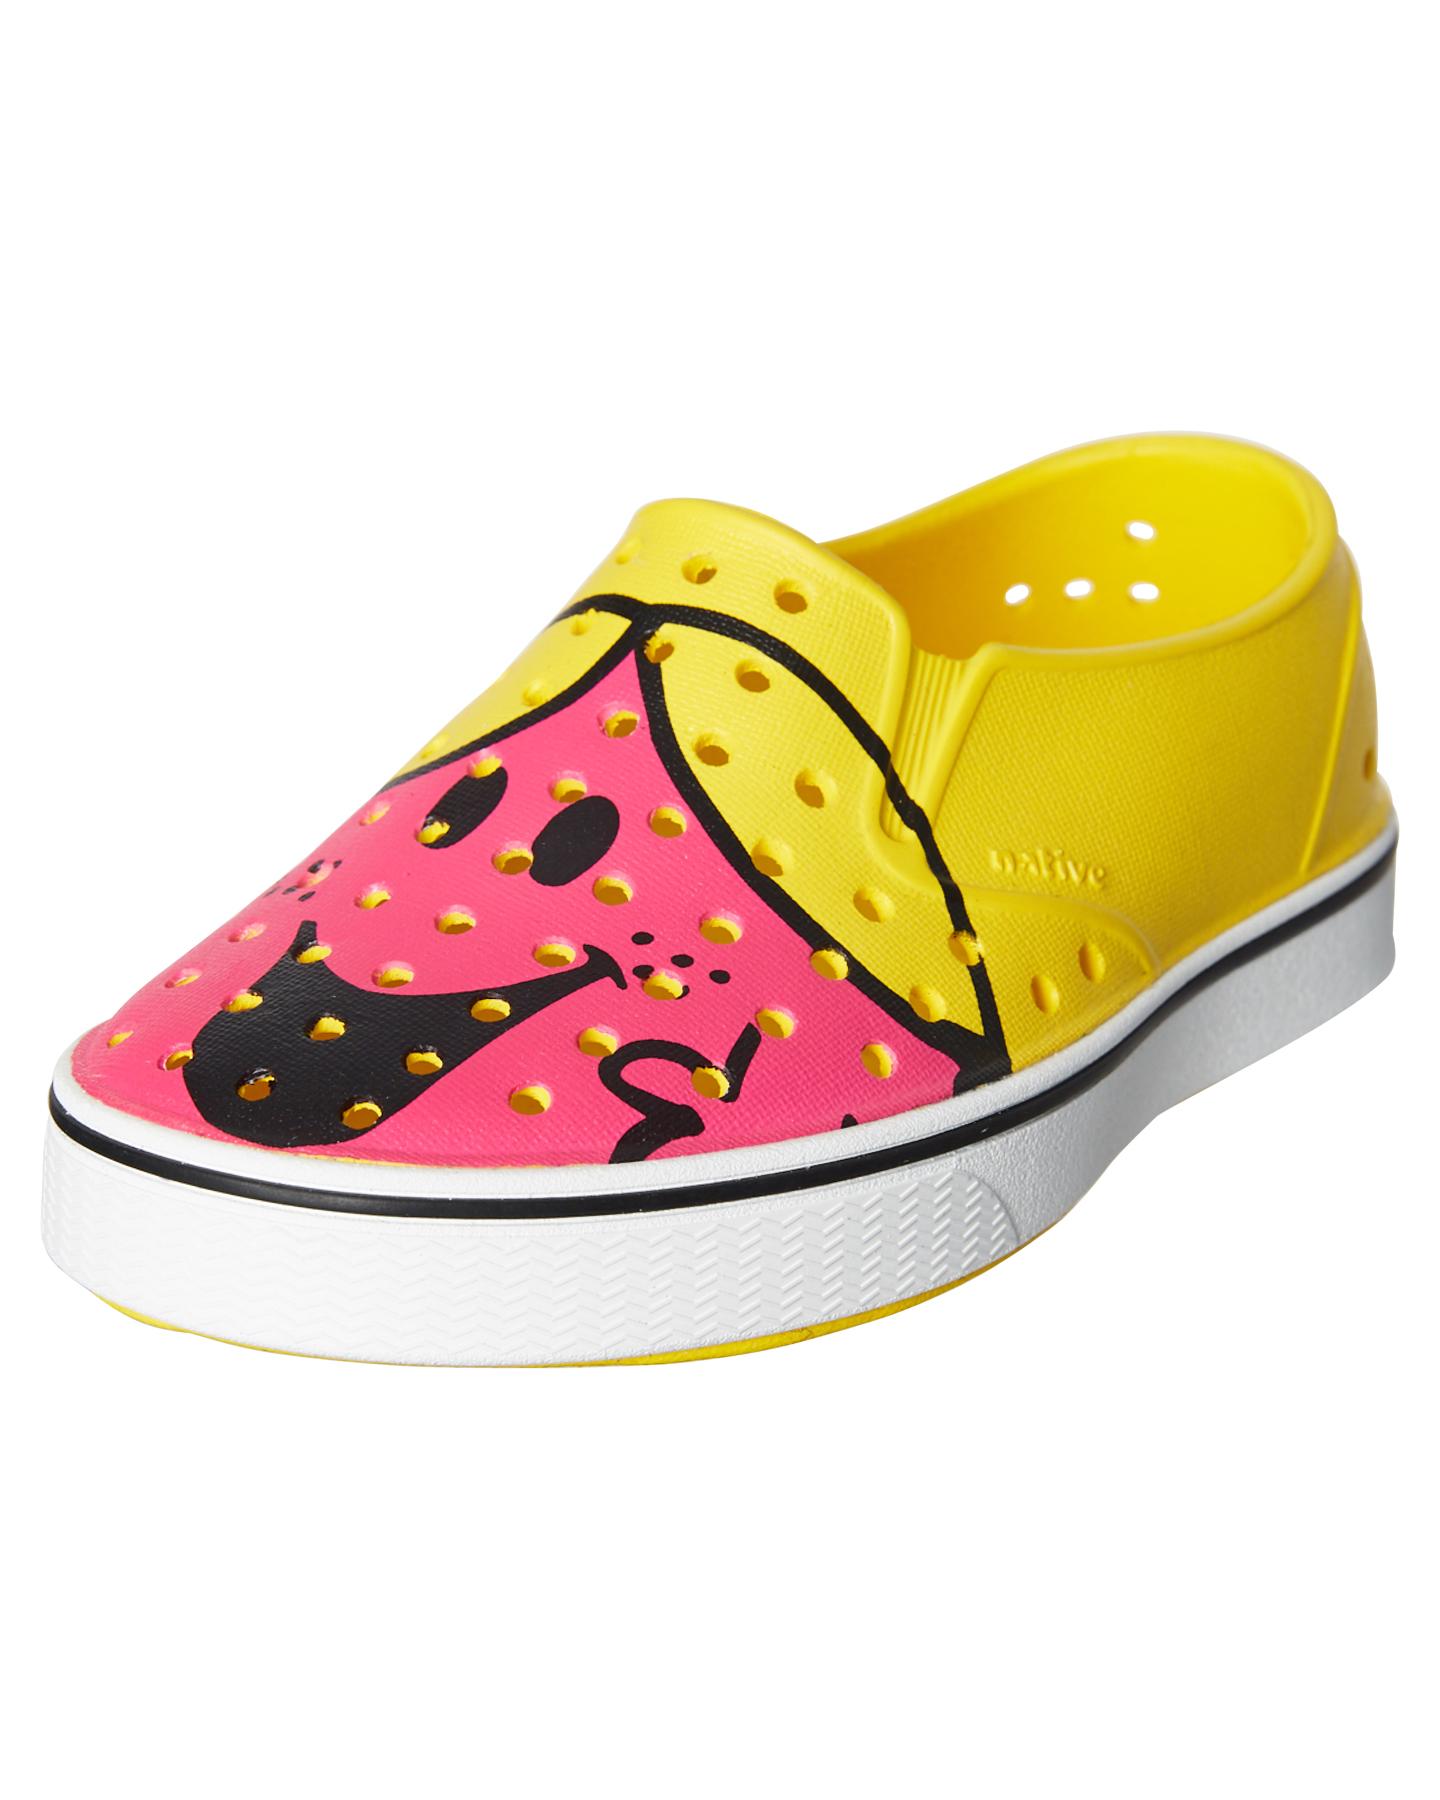 Native Little Miss Shoe - Kids - Yellow Pink | SurfStitch